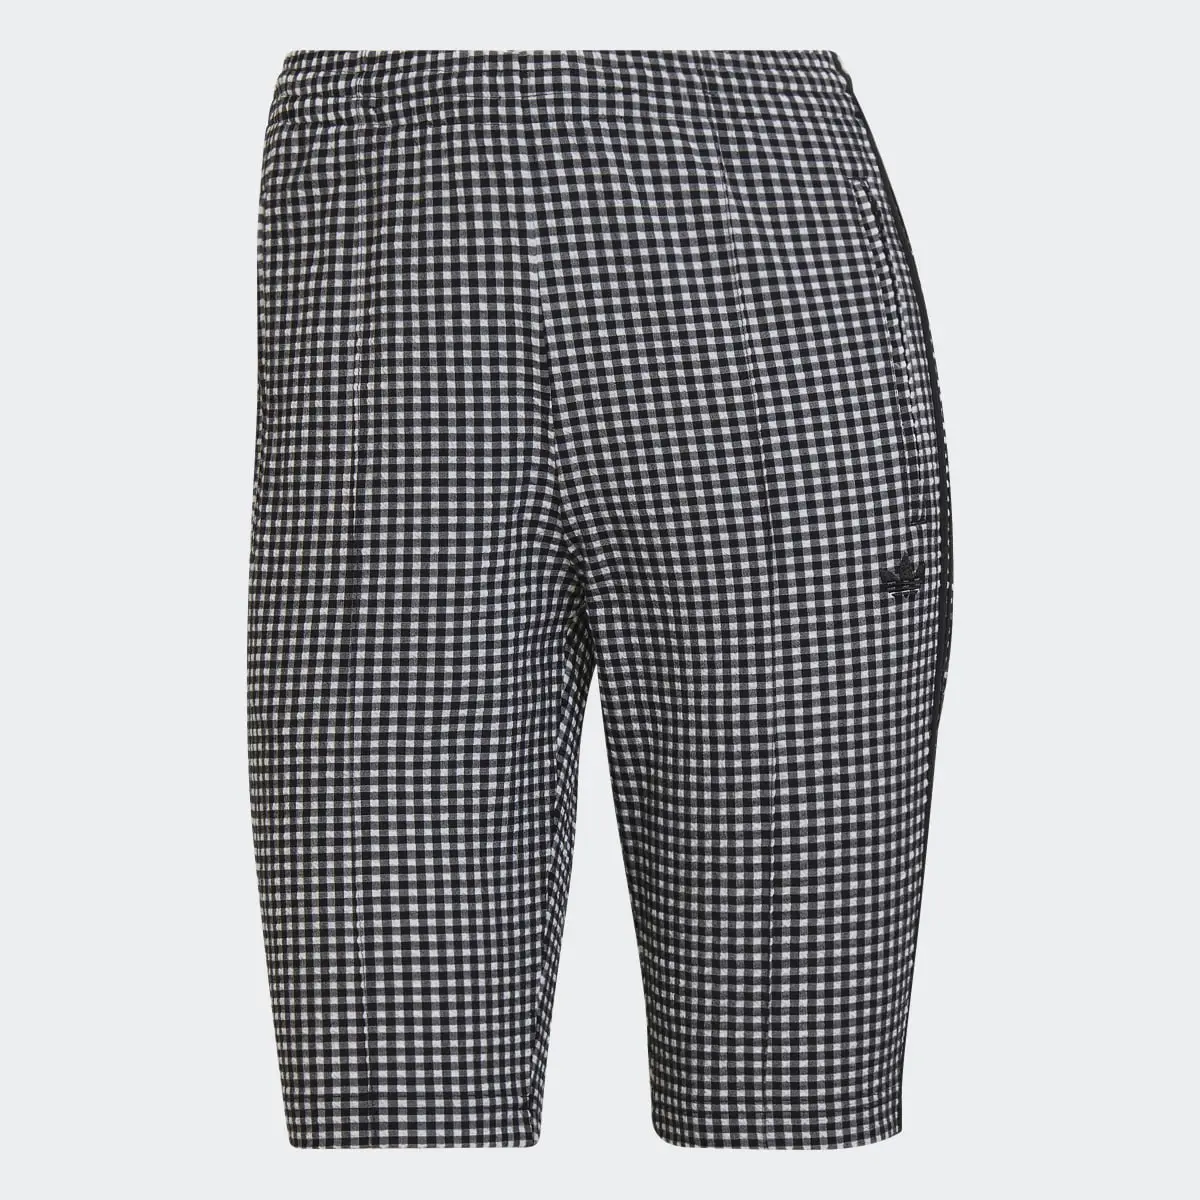 Adidas Long Gingham Shorts. 1